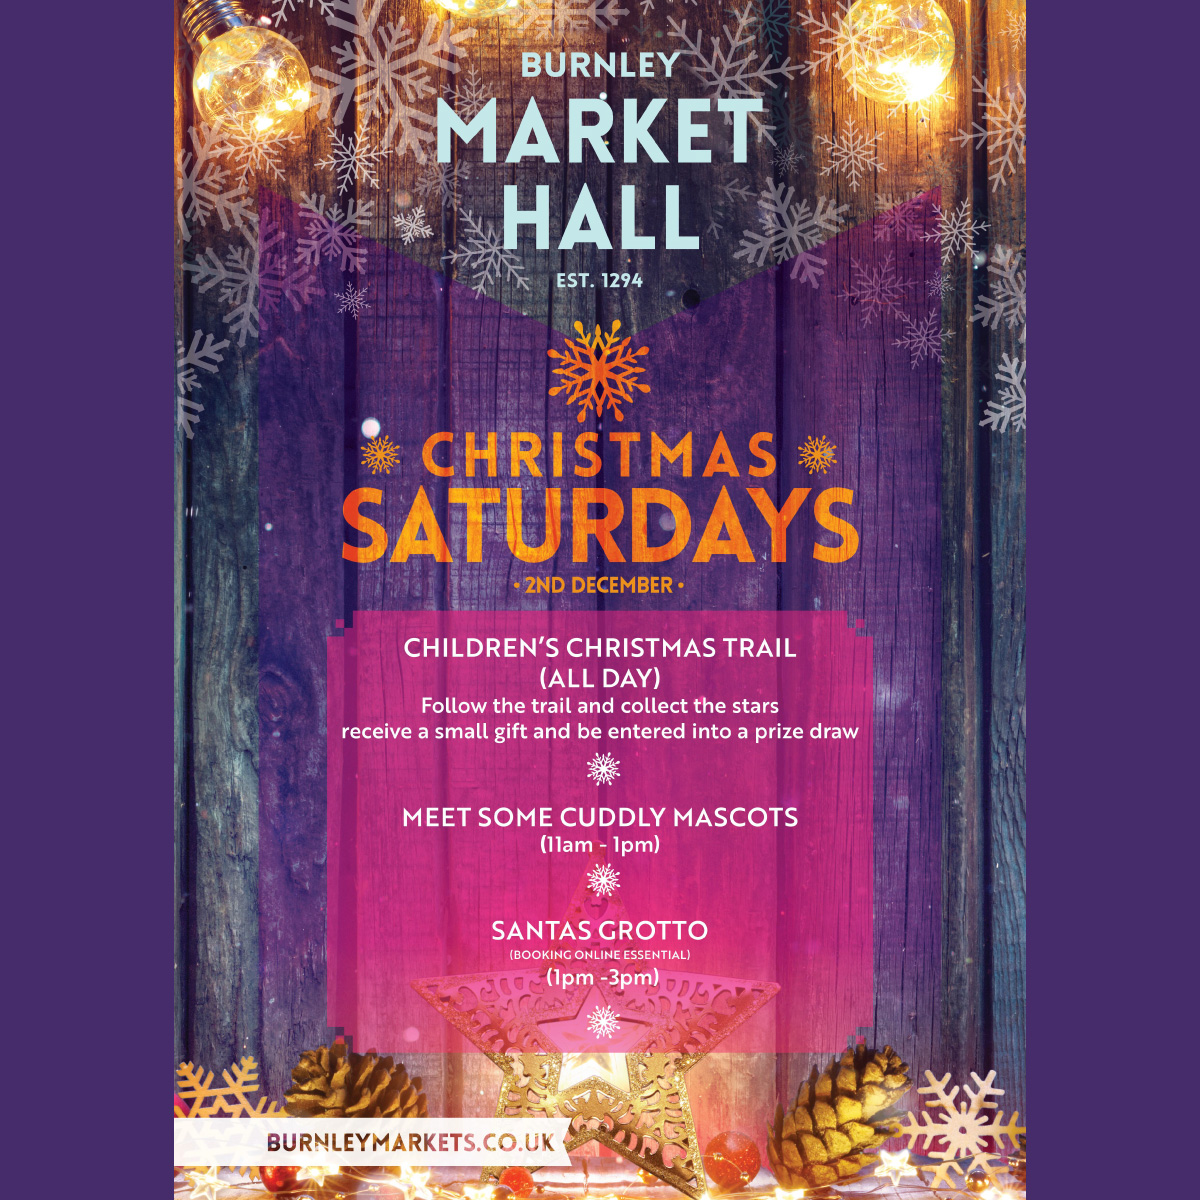 Burnley Market Hall Christmas Saturdays - 2nd December